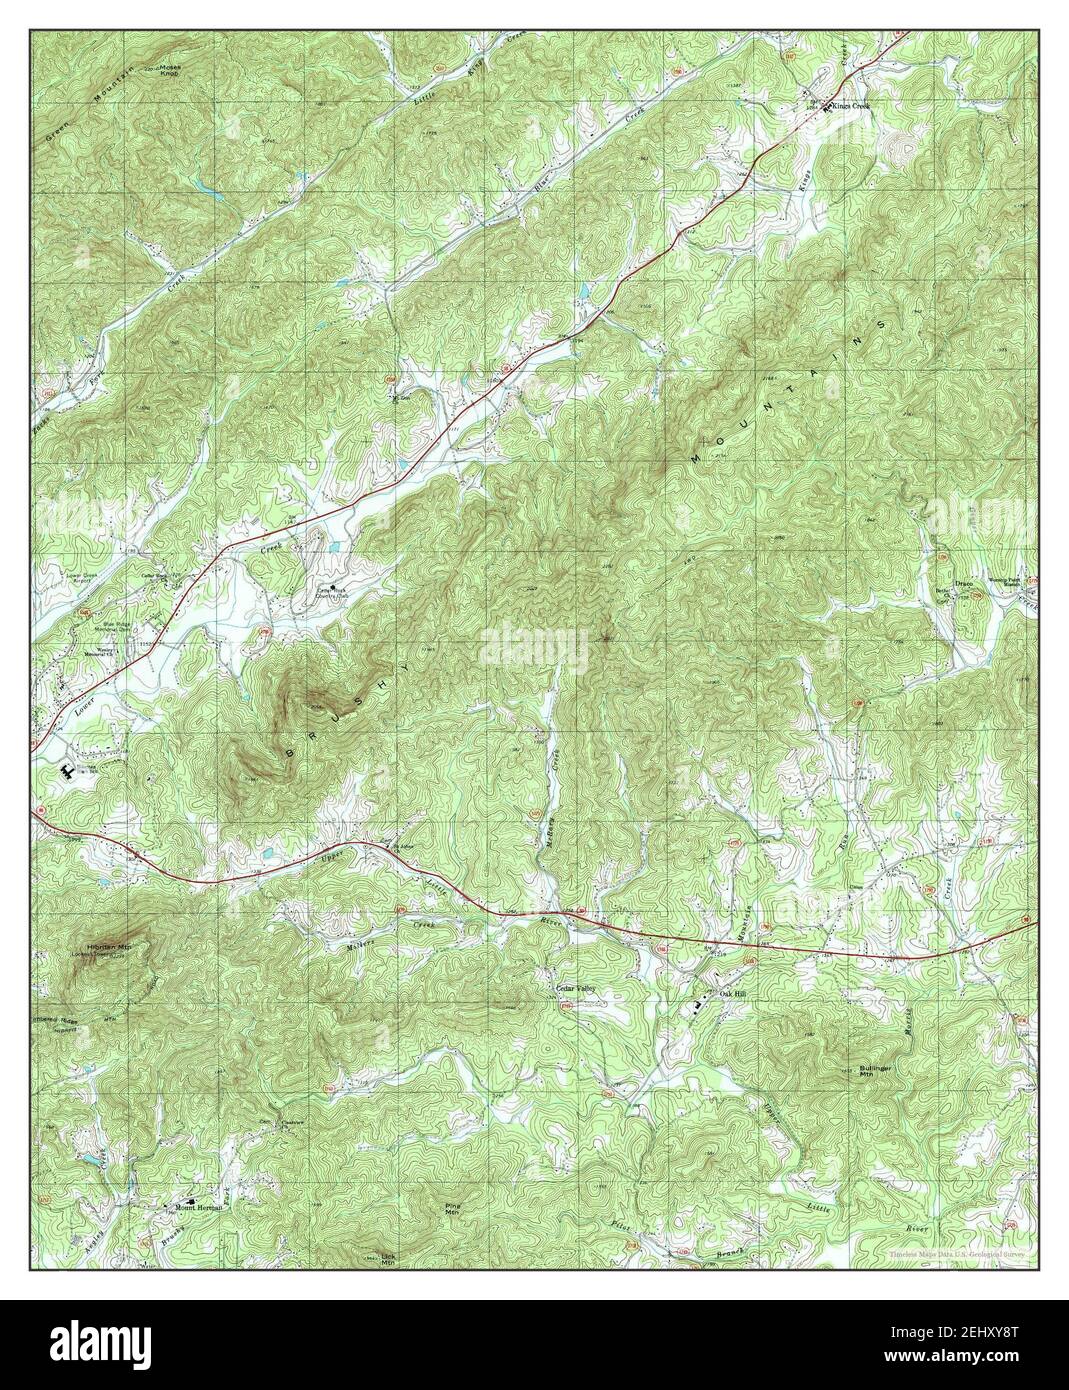 Kings Creek, North Carolina, map 1997, 1:24000, United States of America by Timeless Maps, data U.S. Geological Survey Stock Photo